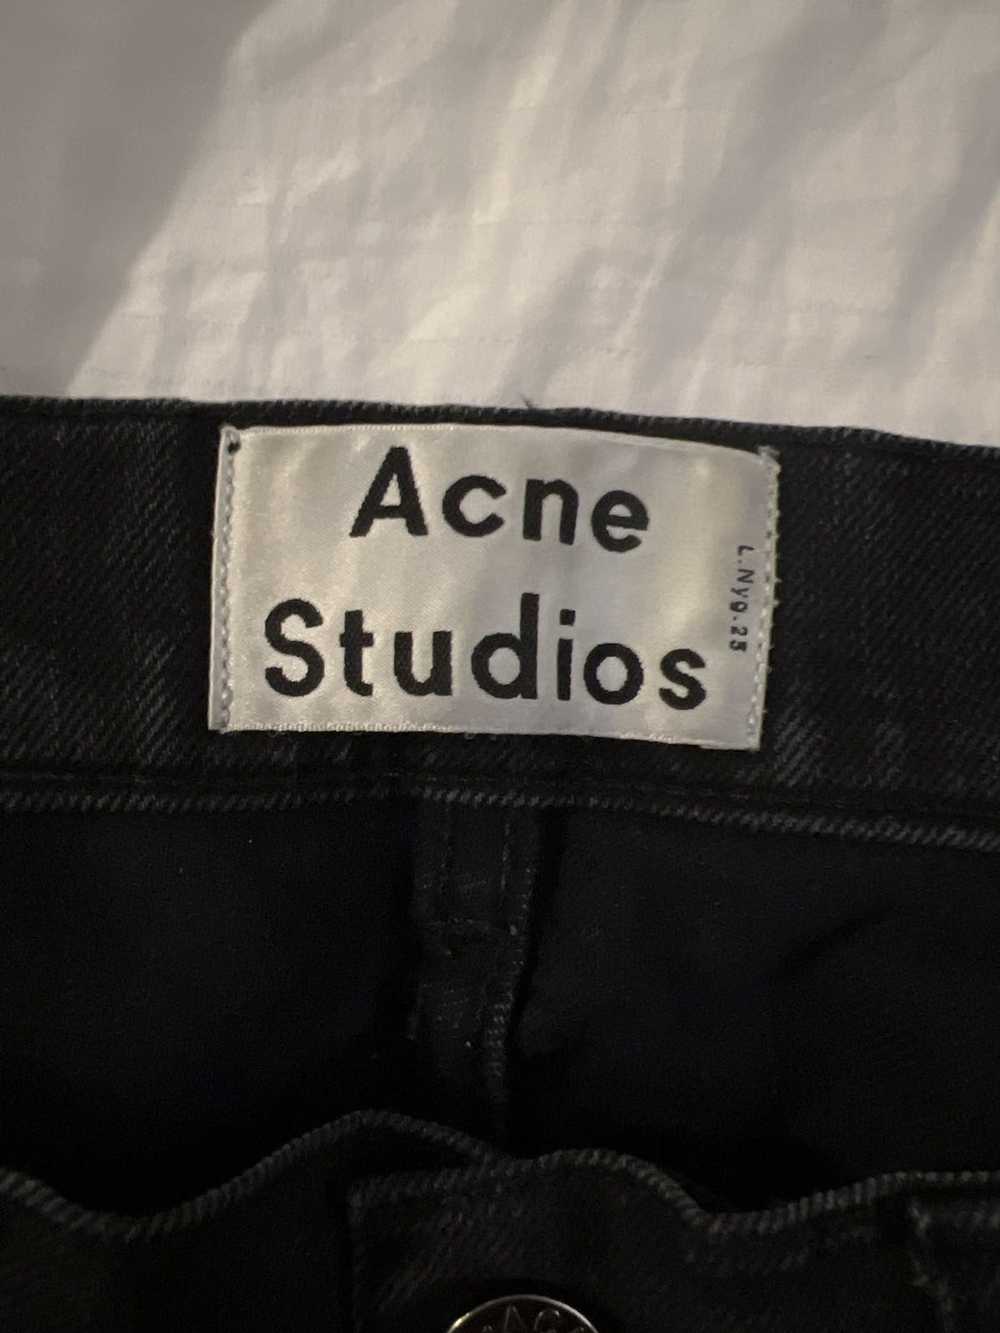 Acne Studios Acne Studios Ace Cash Black Jeans - image 10